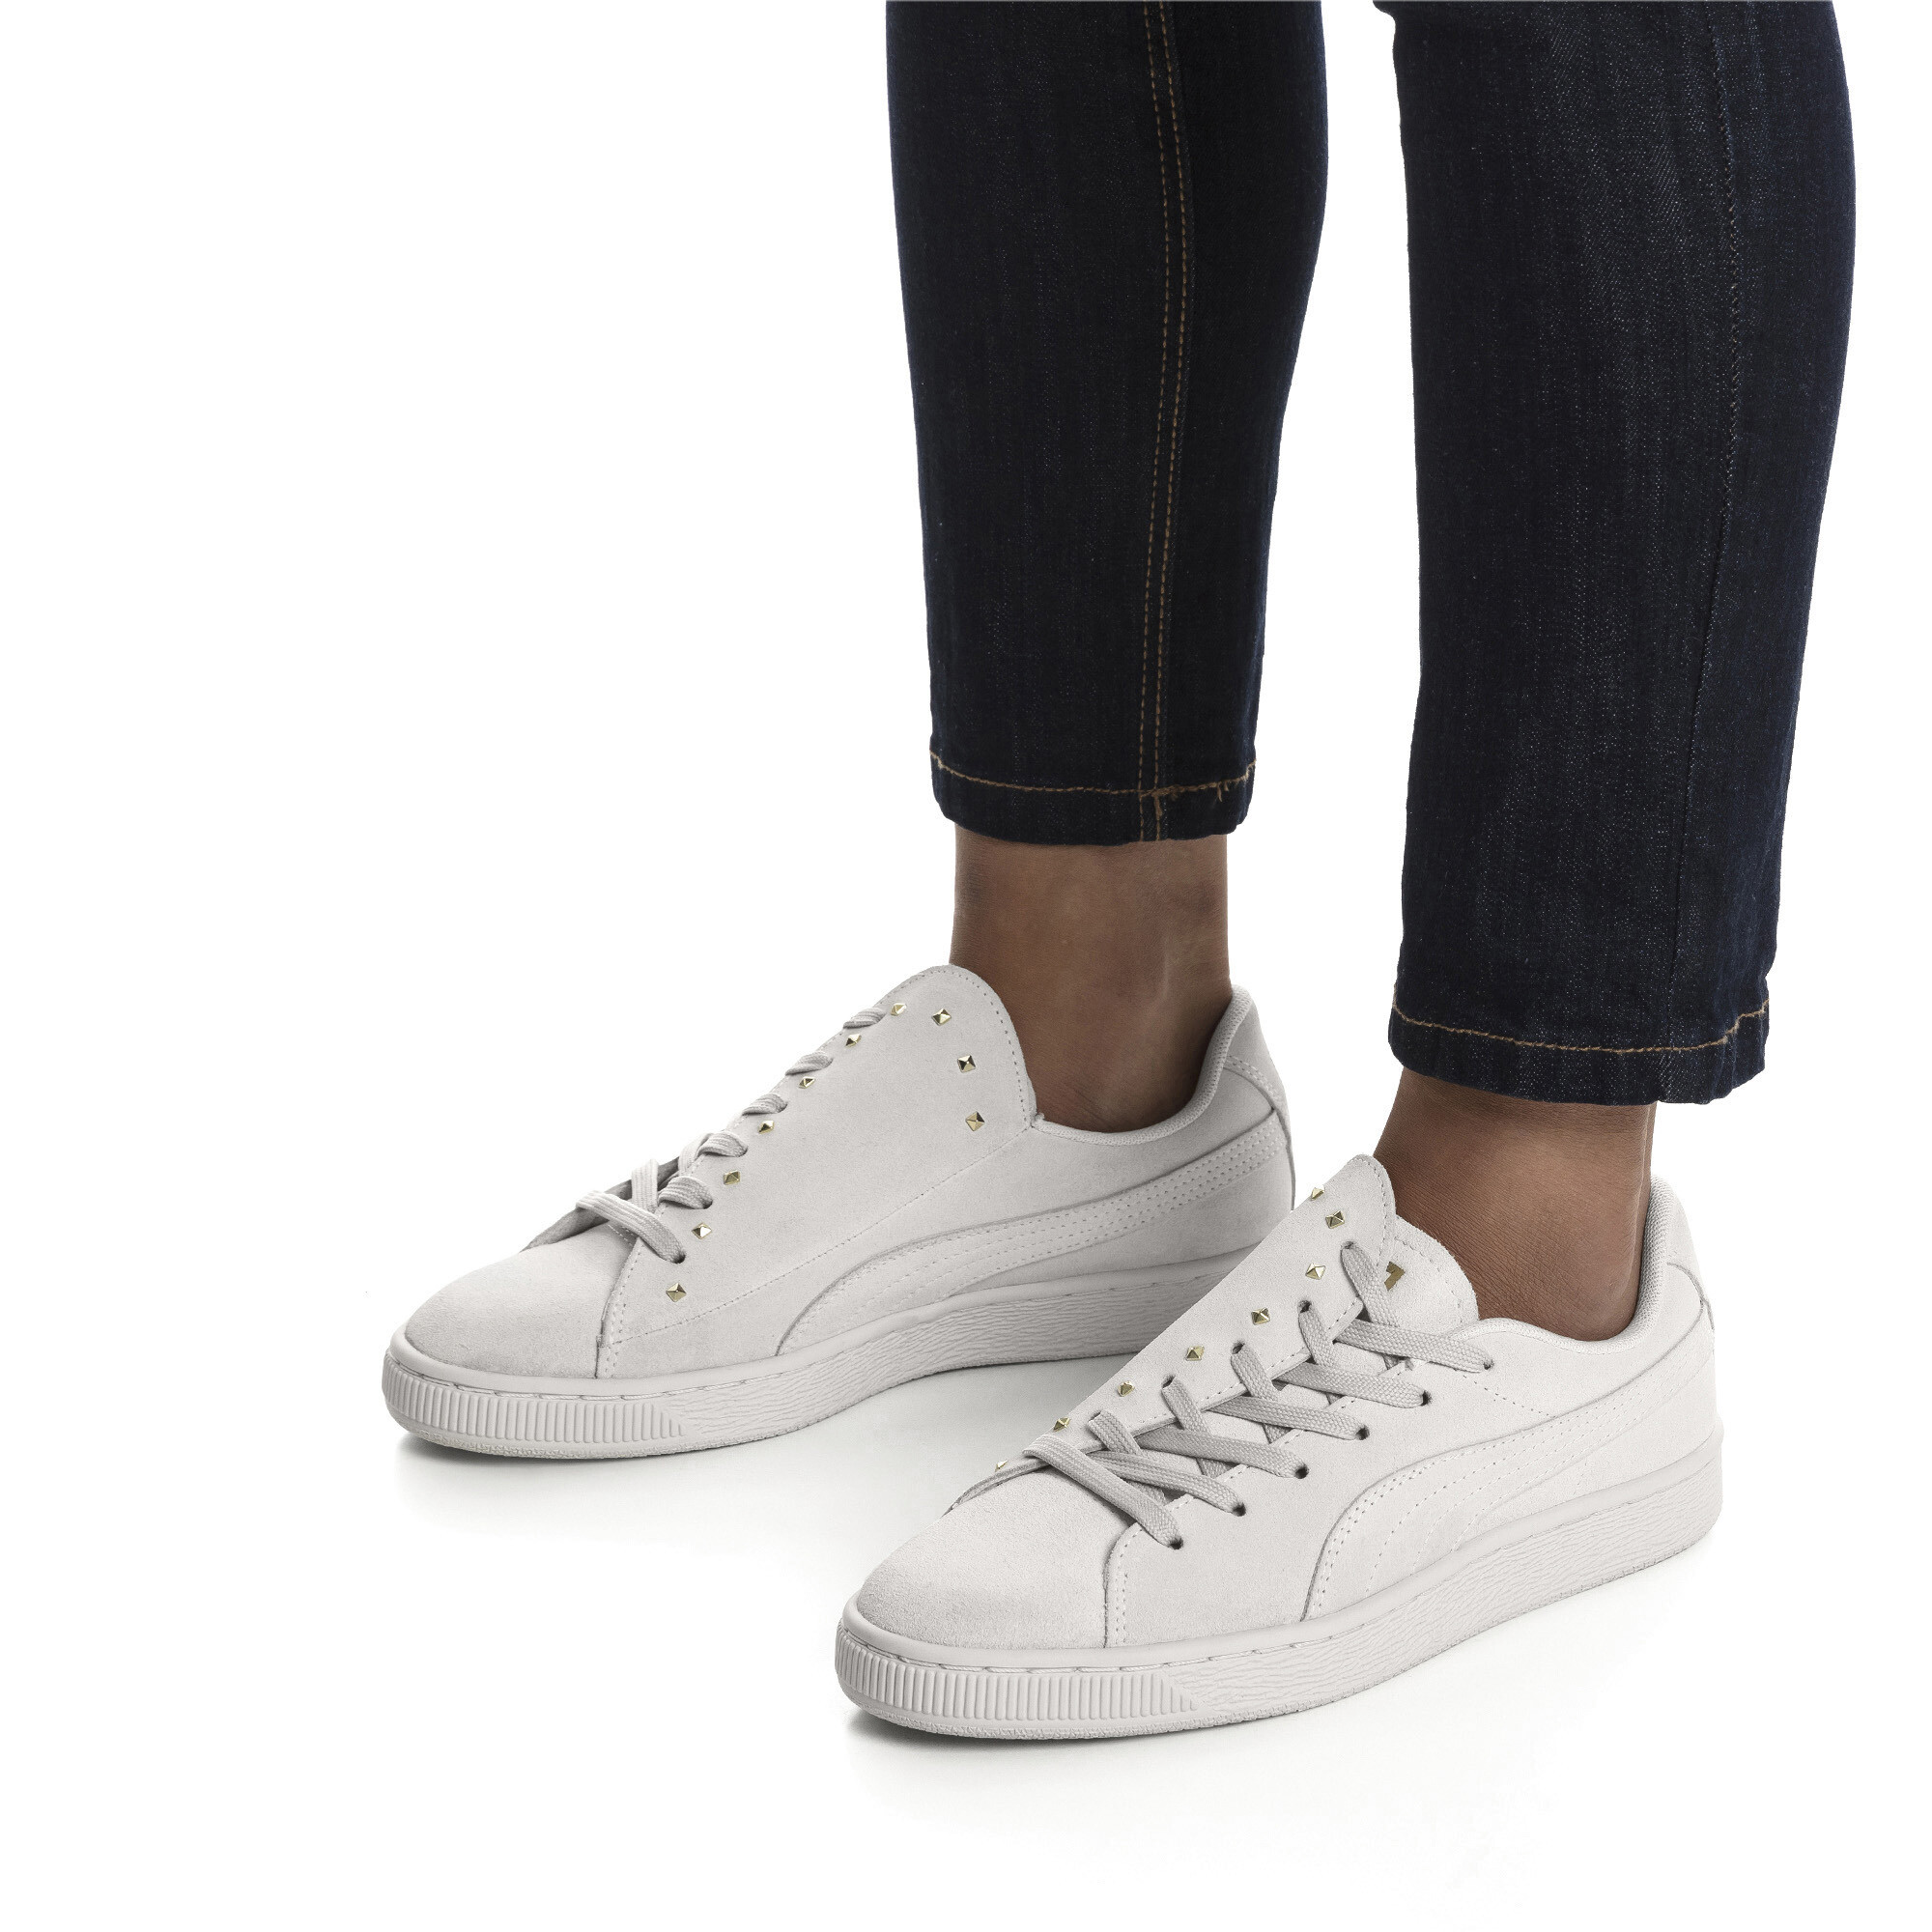 PUMA Women's Suede Crush Studs Sneakers | eBay